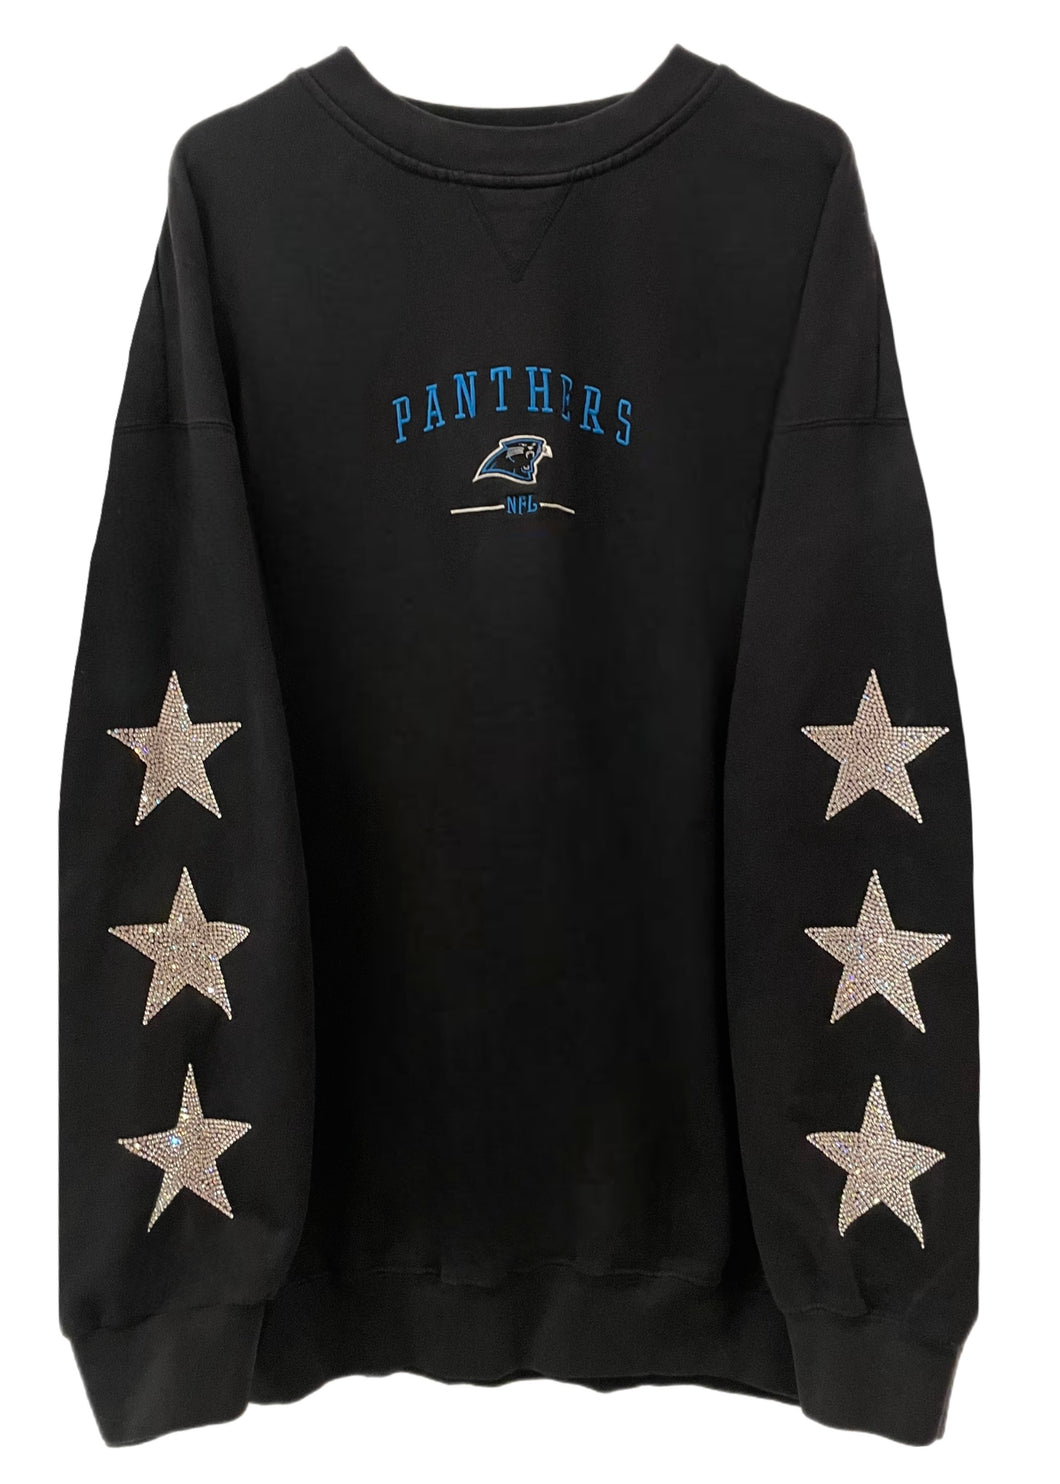 Carolina Panthers, Football One of a KIND Vintage Sweatshirt with Three Crystal Star Design